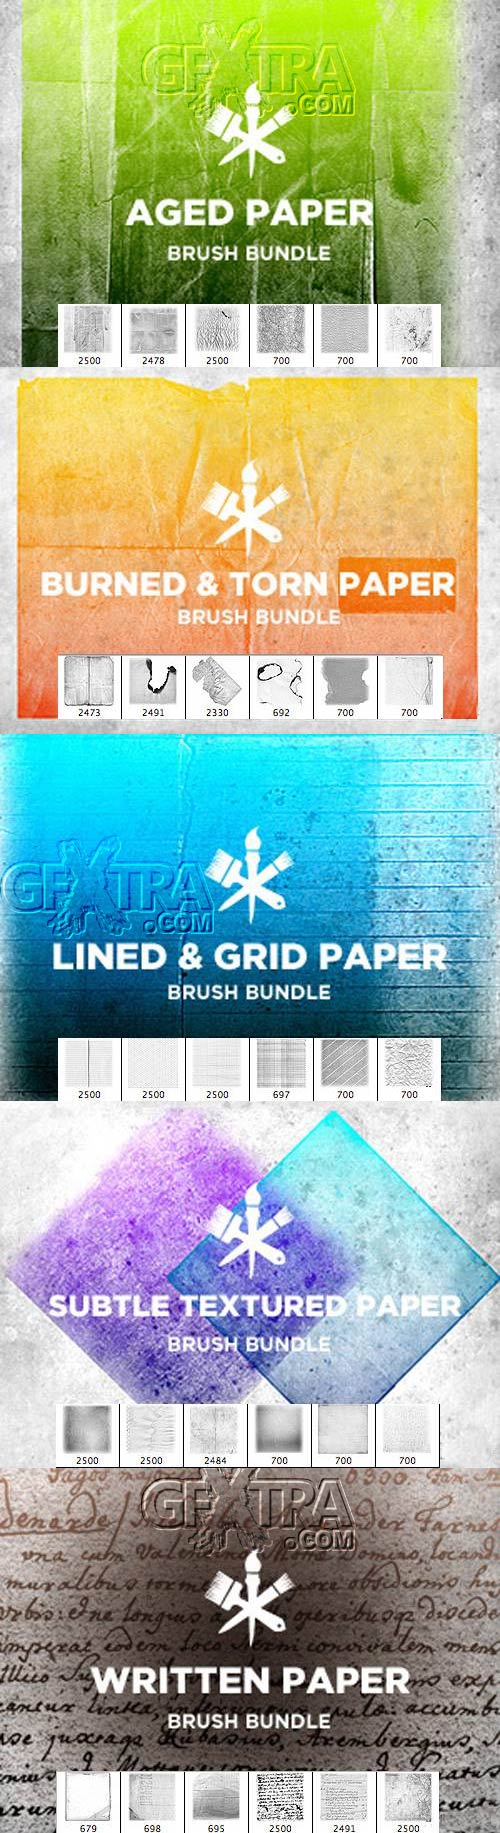 Paper Textures, 5 Great Photoshop Brush Bundles!